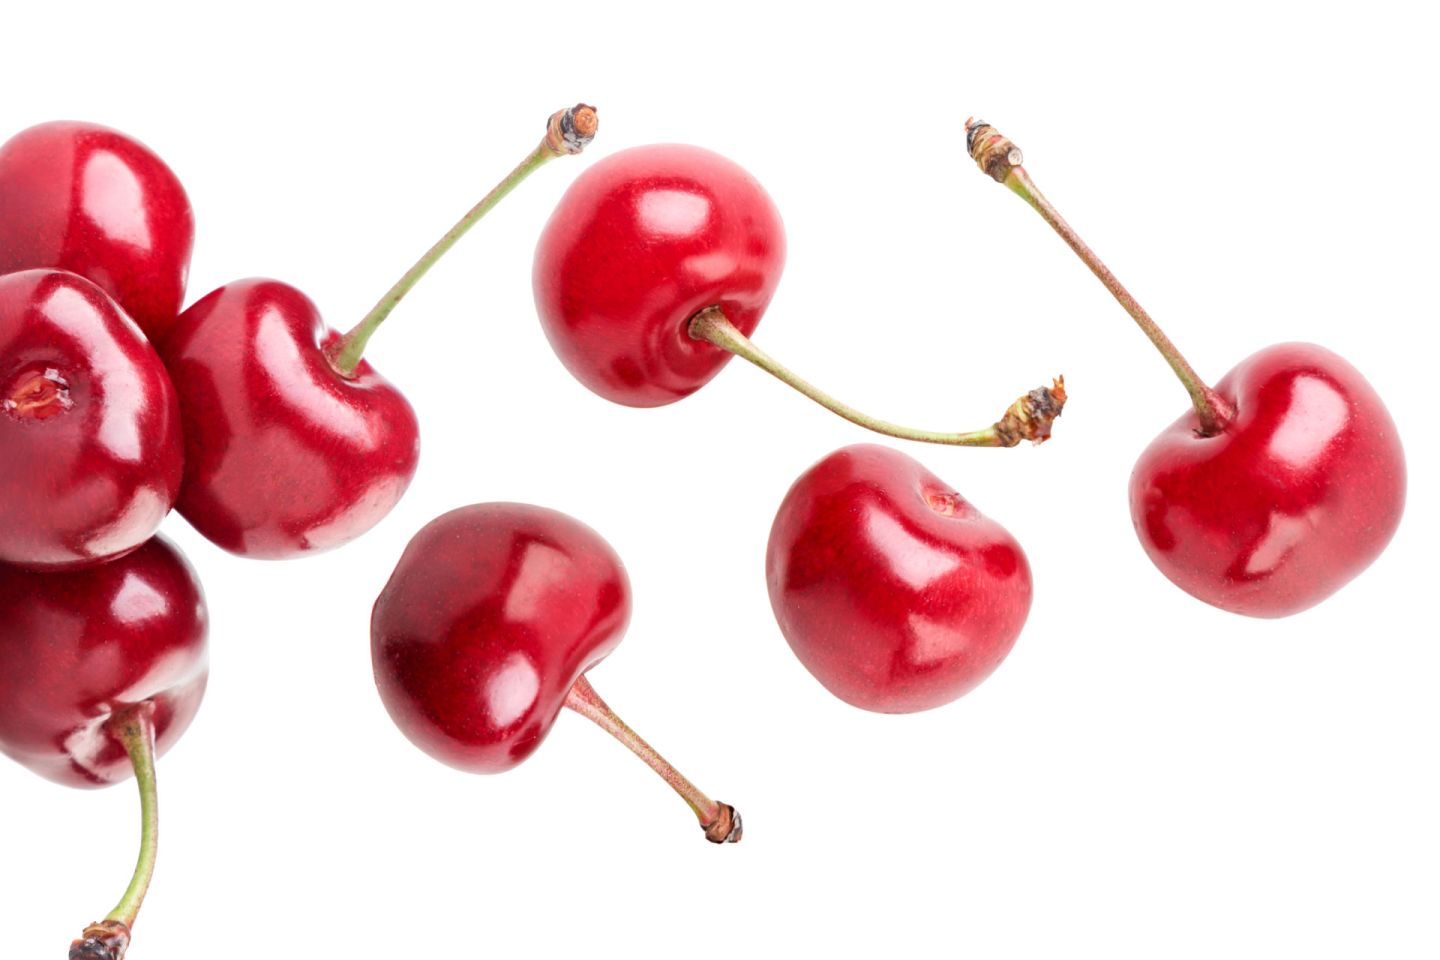 Should Hospitals ‘Cherry-Pick’ Patients?